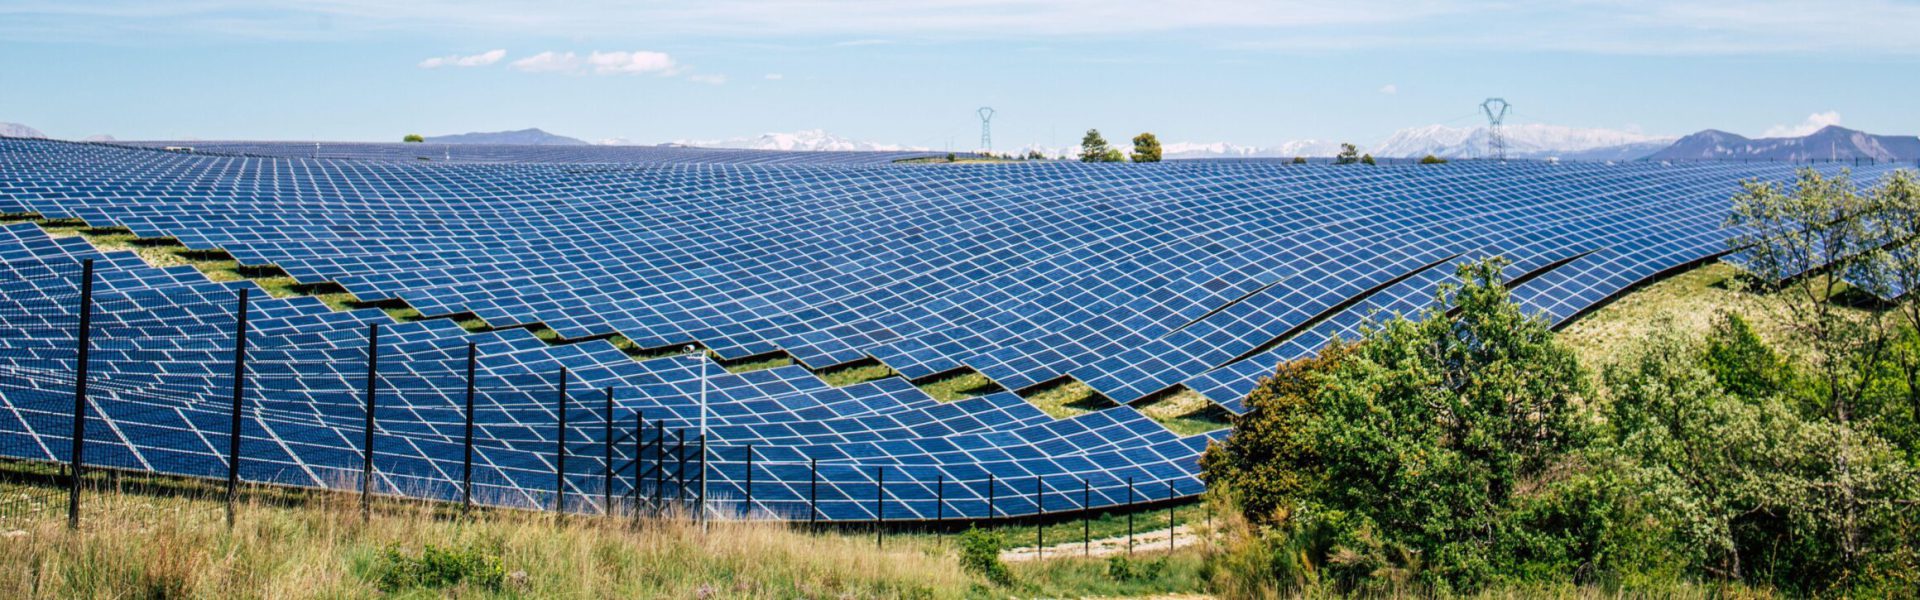 2E1M4G3 Renewable Energy and Sustainable Development / Park of Photovoltaic Solar Panels